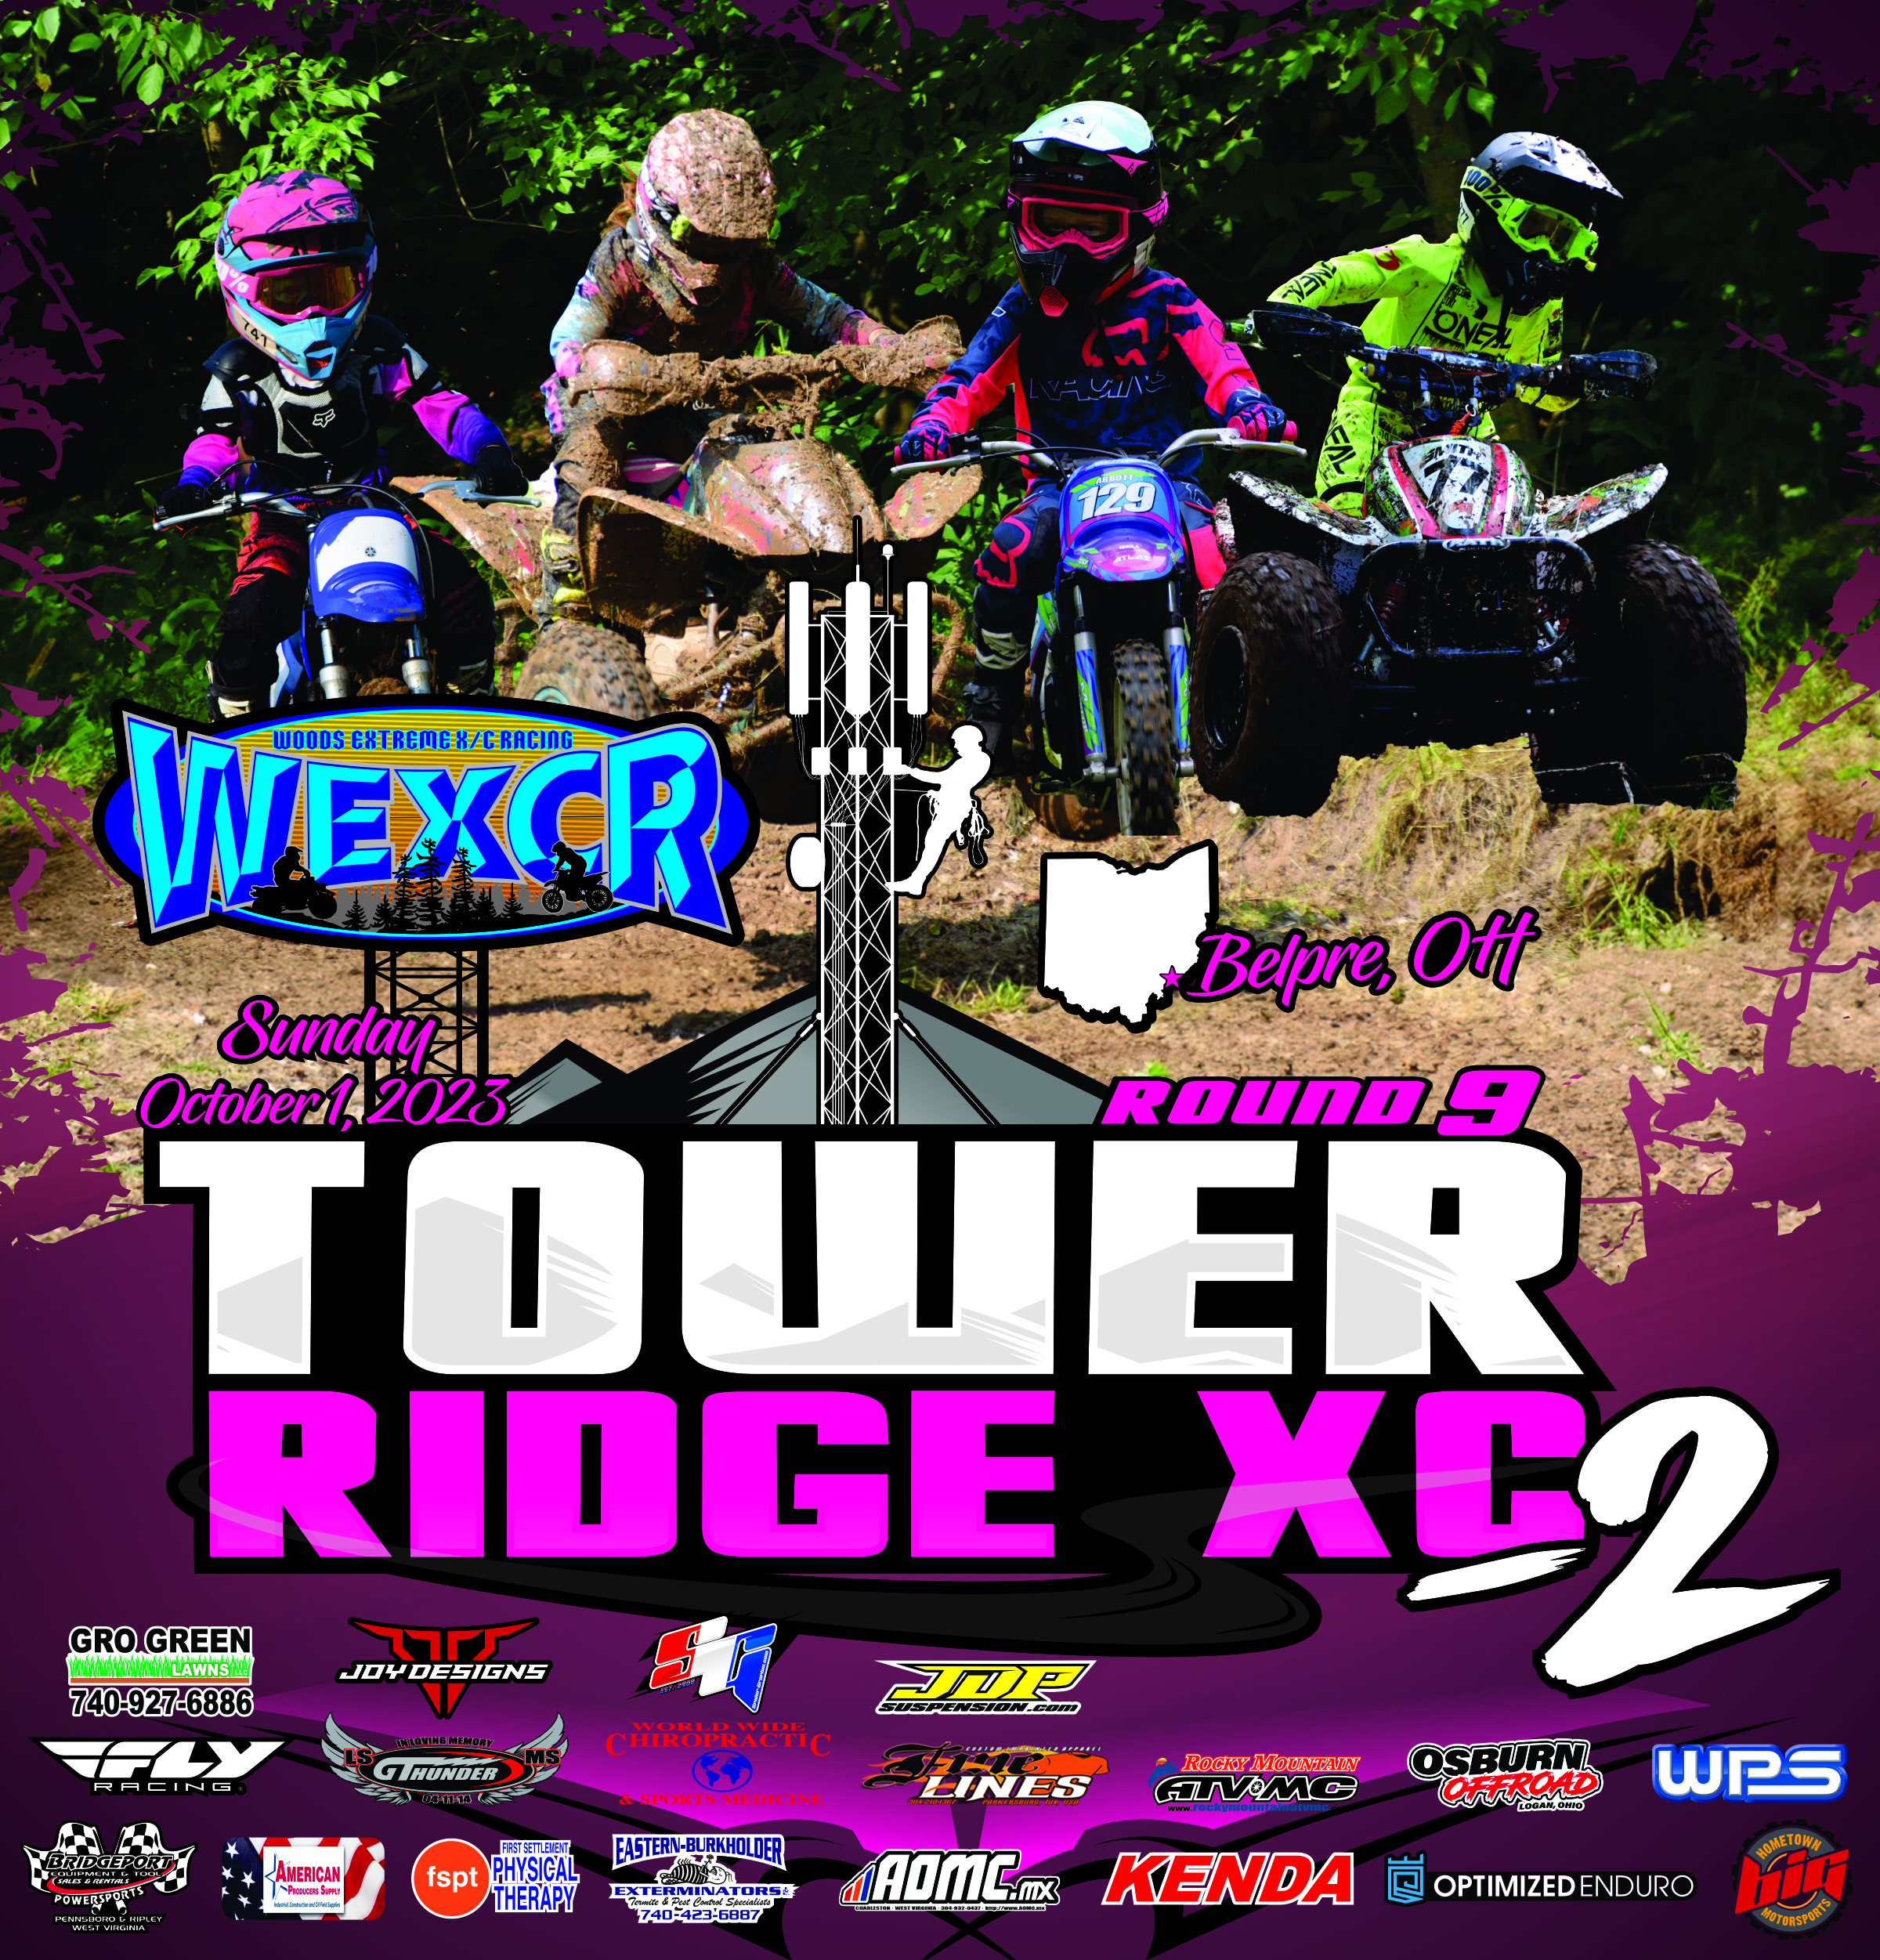 WEXCR 23 Tower Ridge XC R9-Flyer